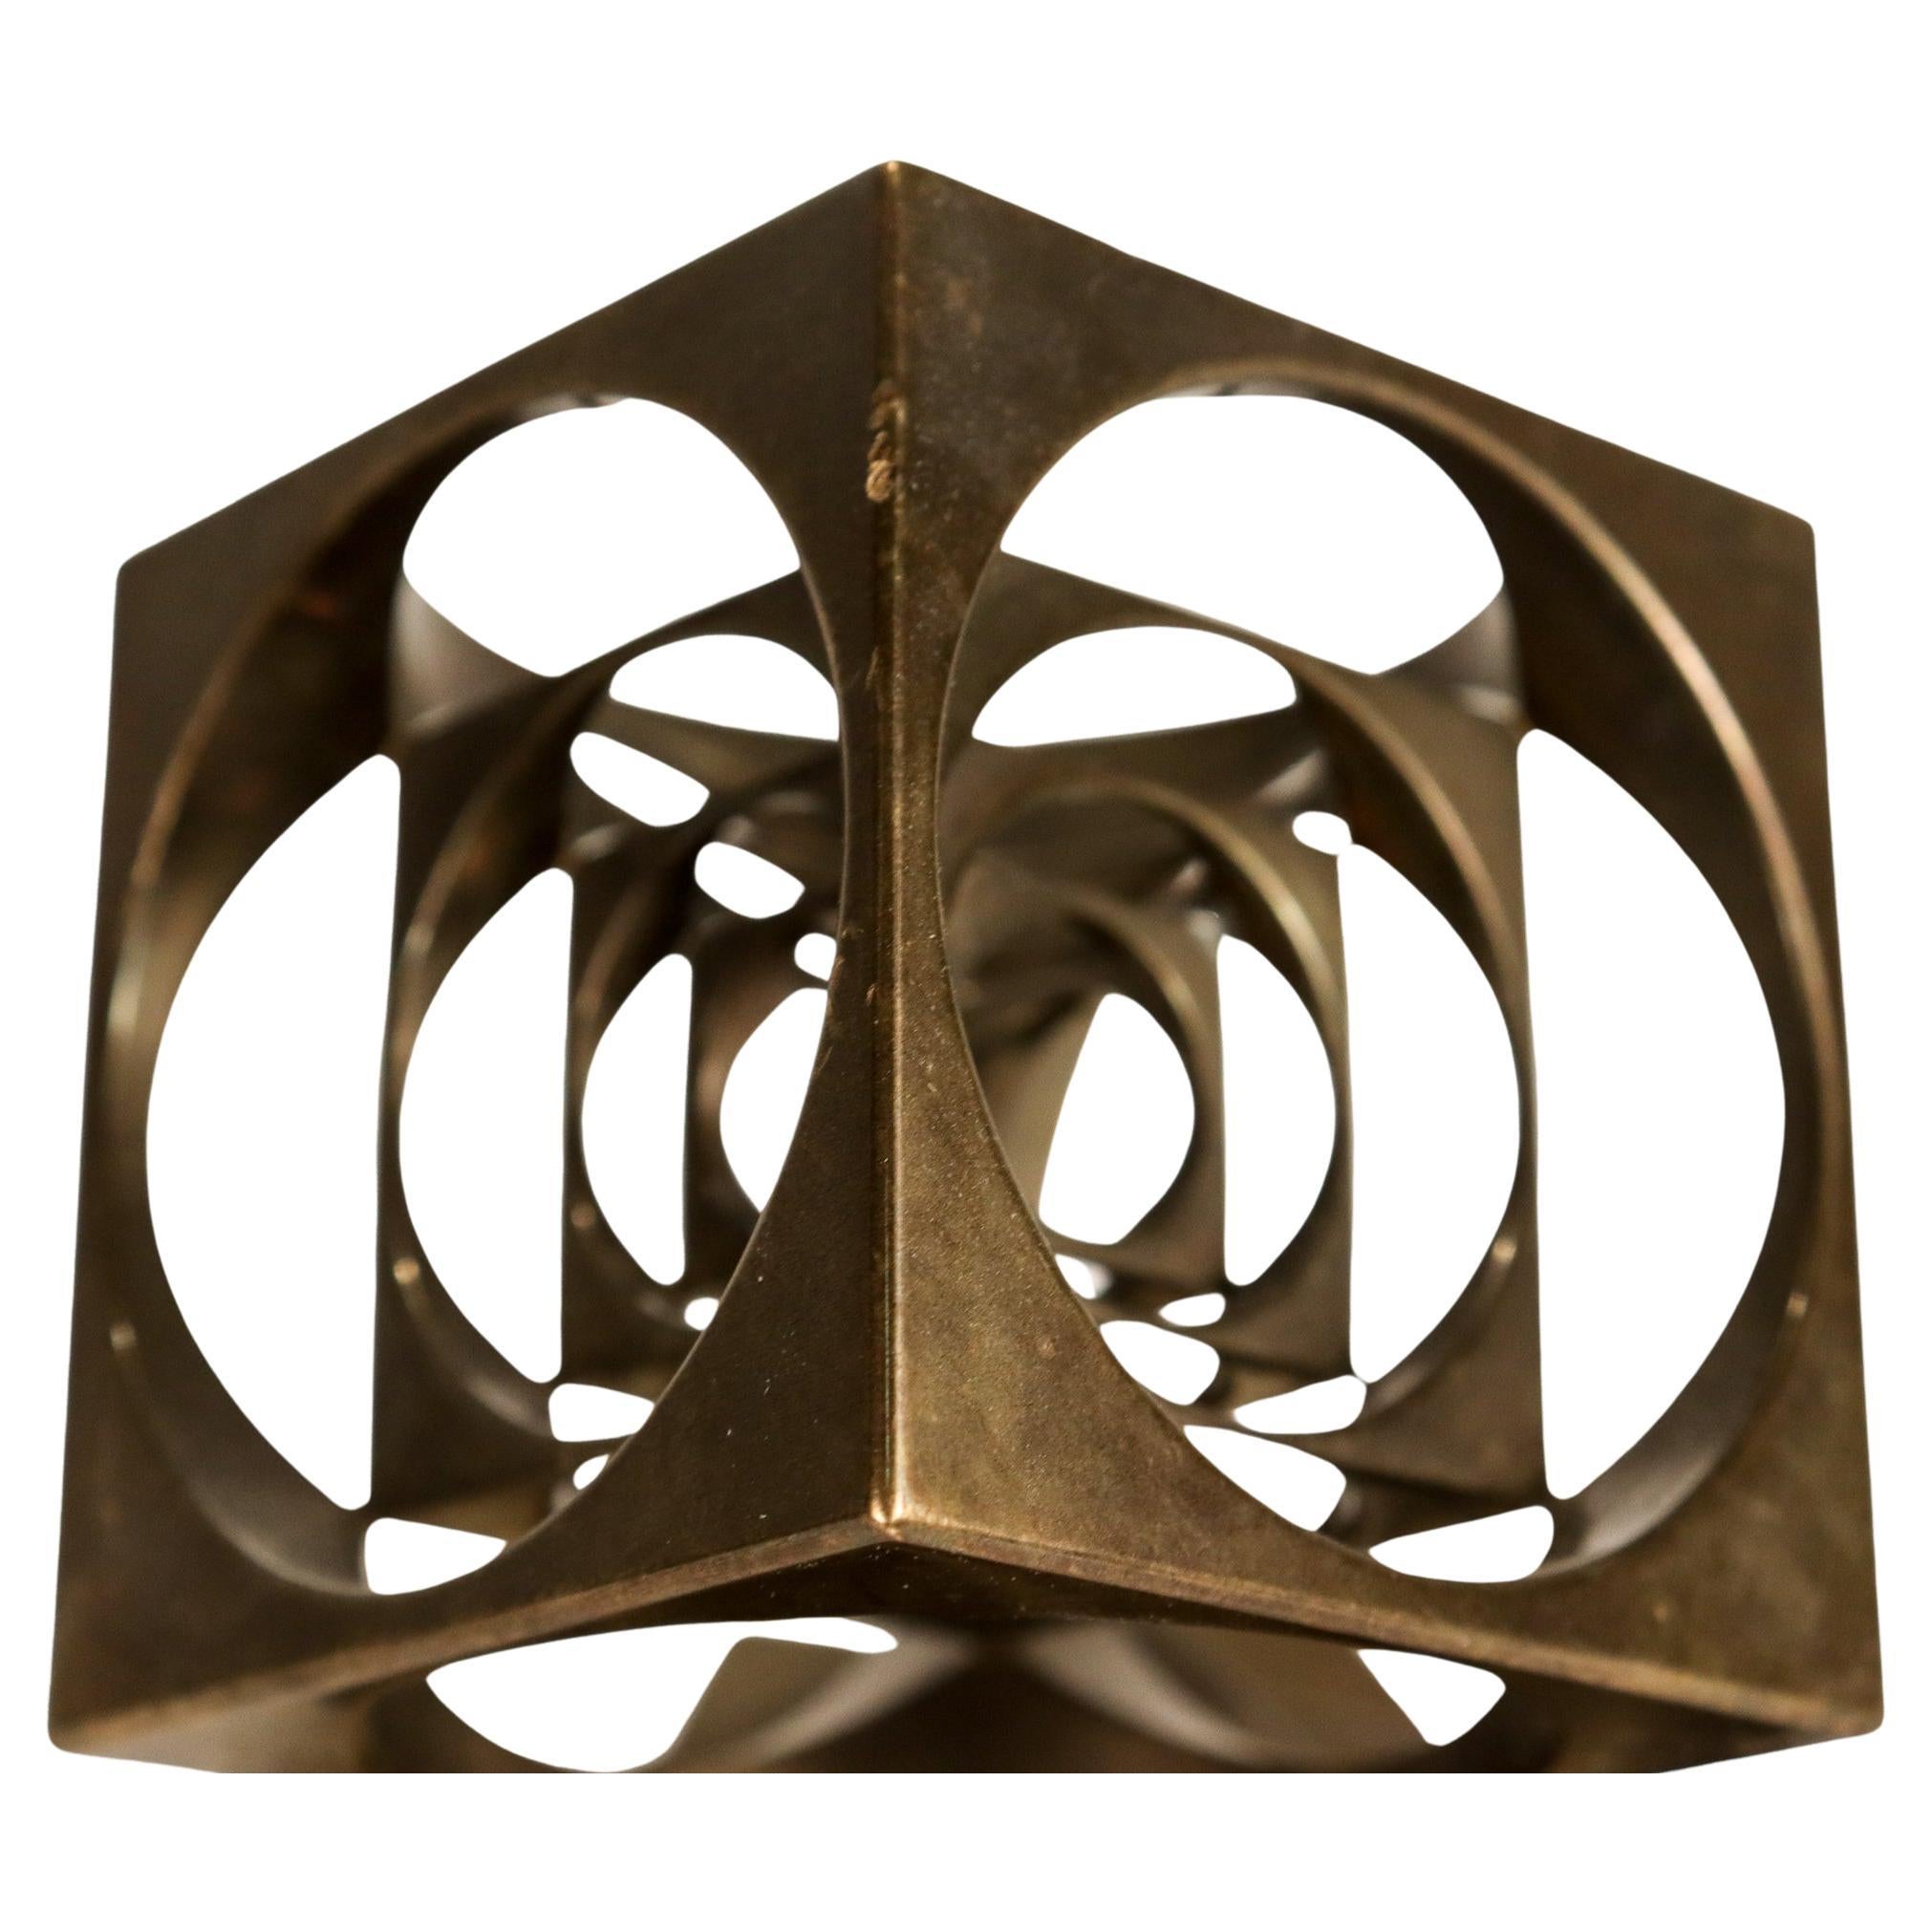 Midcentury Geometric Machined Bronze Turner's Cube Desk Paperweight / Sculpture 1